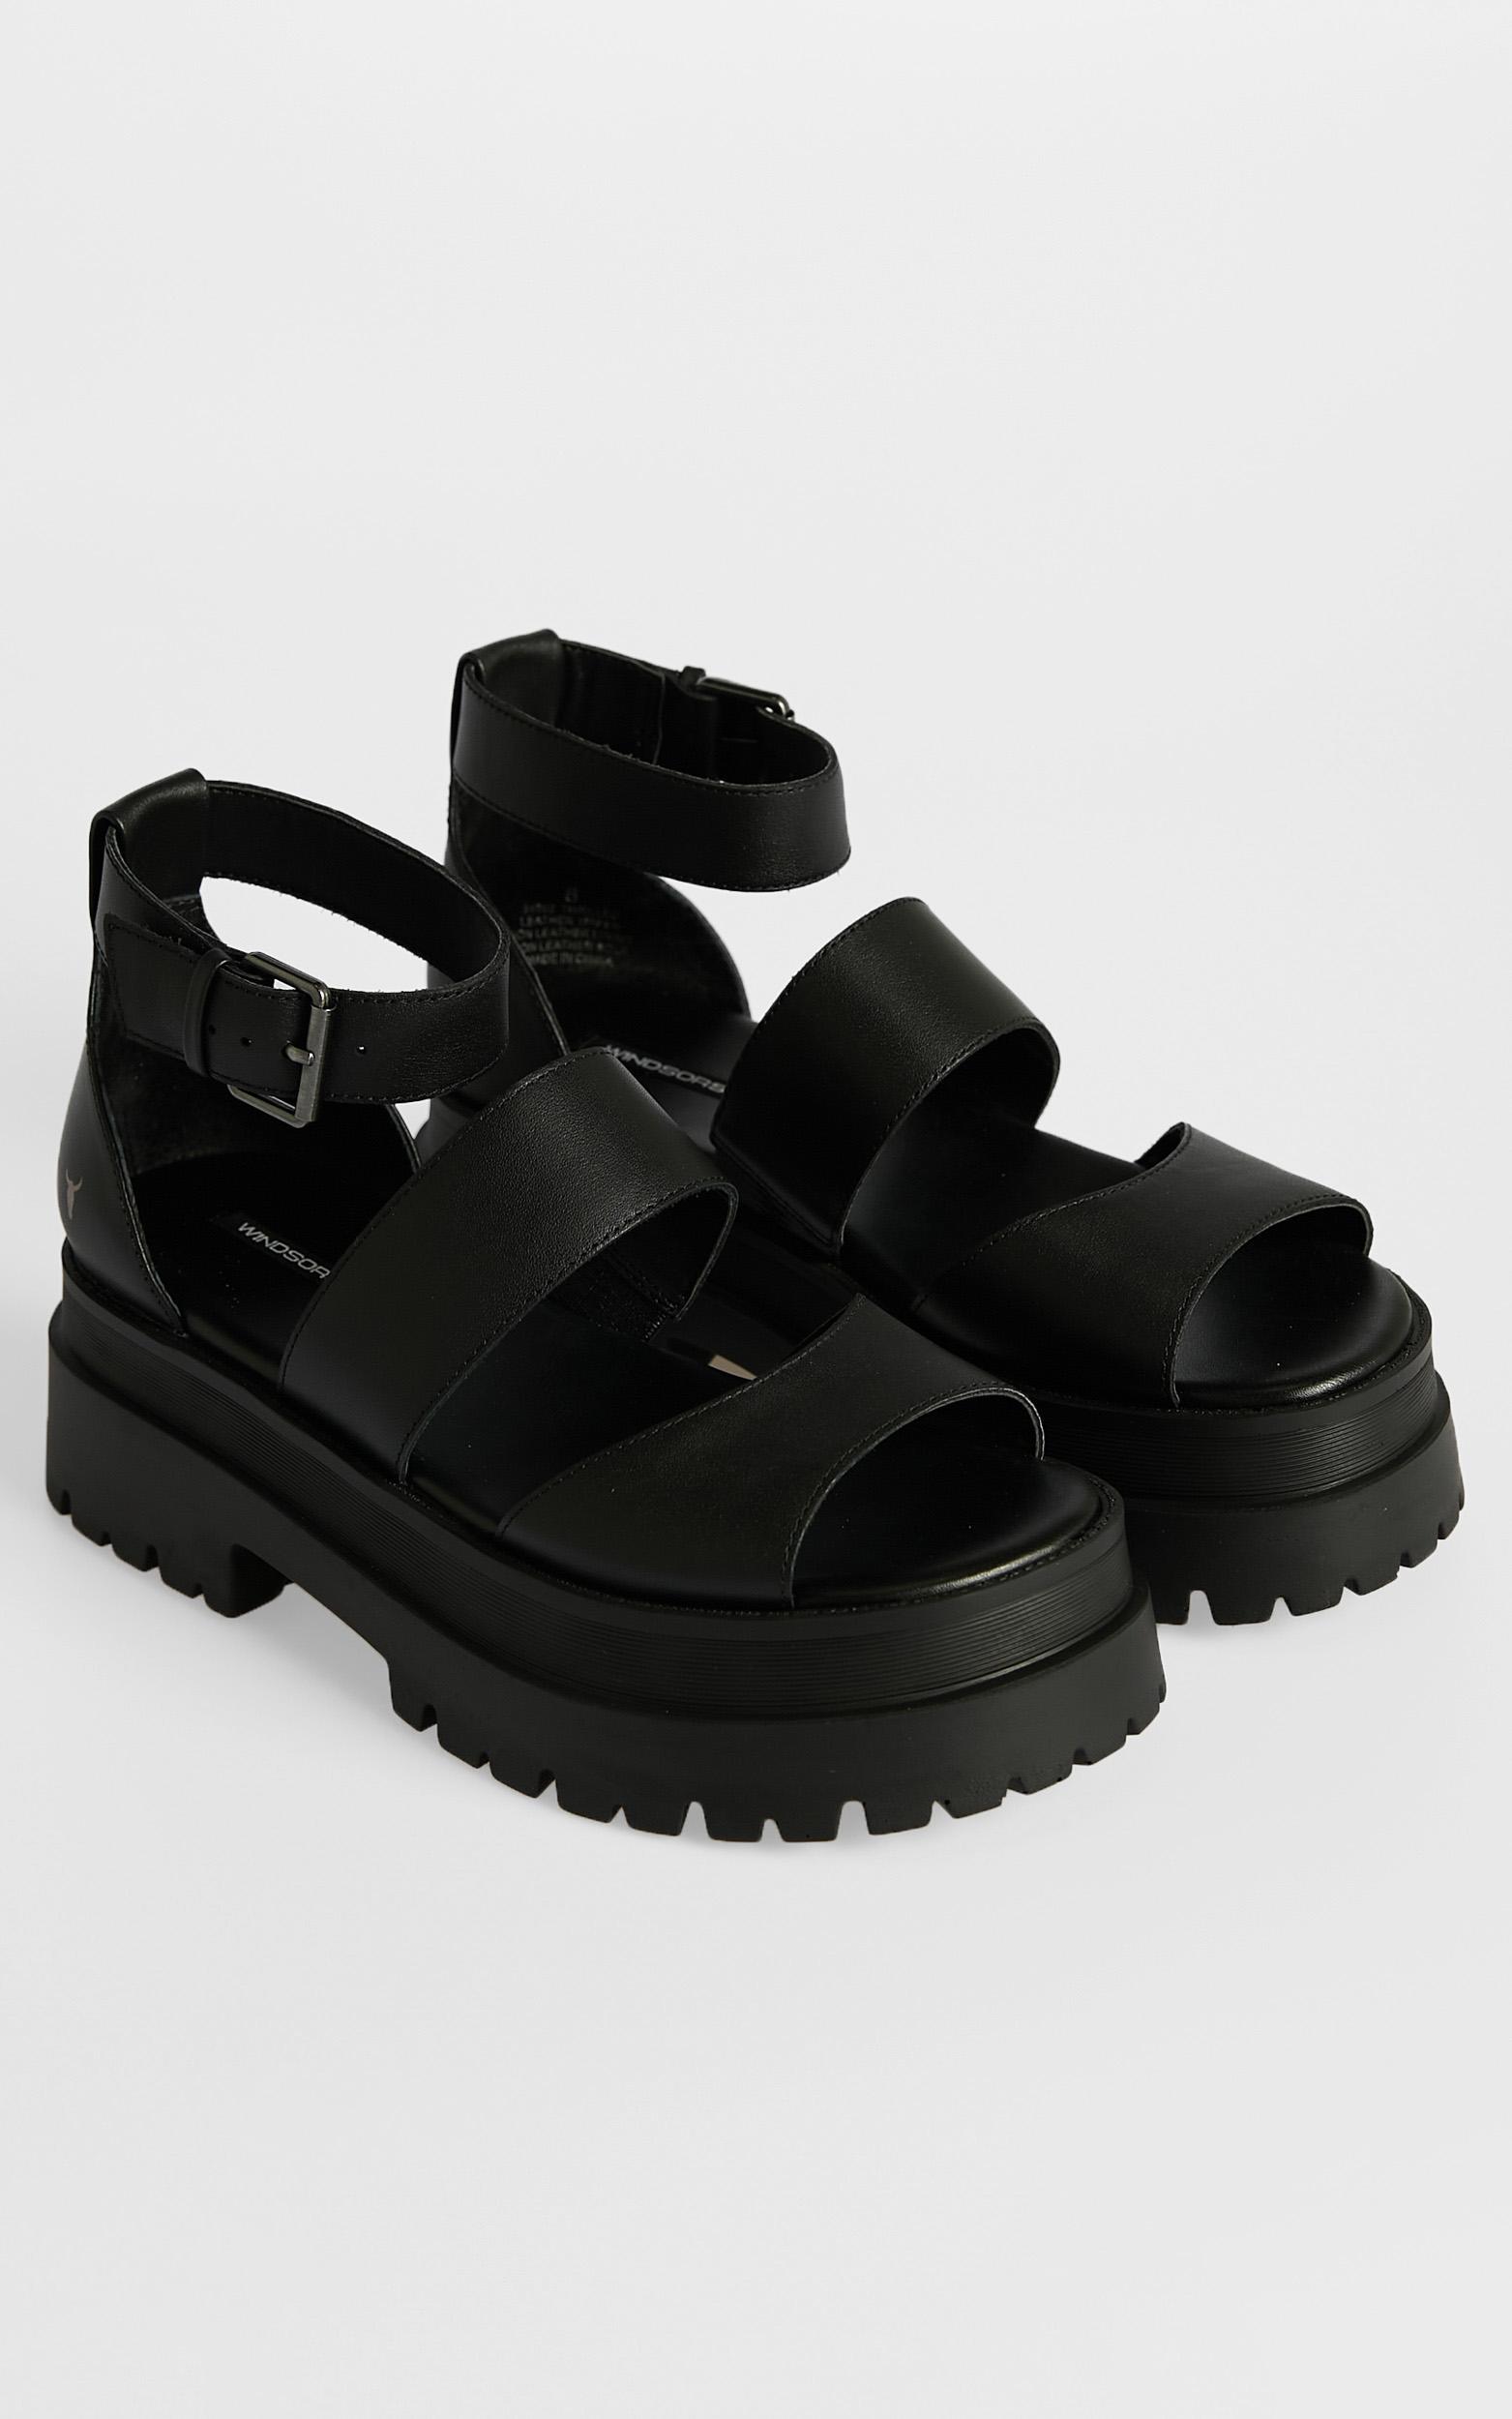 Windsor Smith - Thrilled Sandals in Black Leather | Showpo